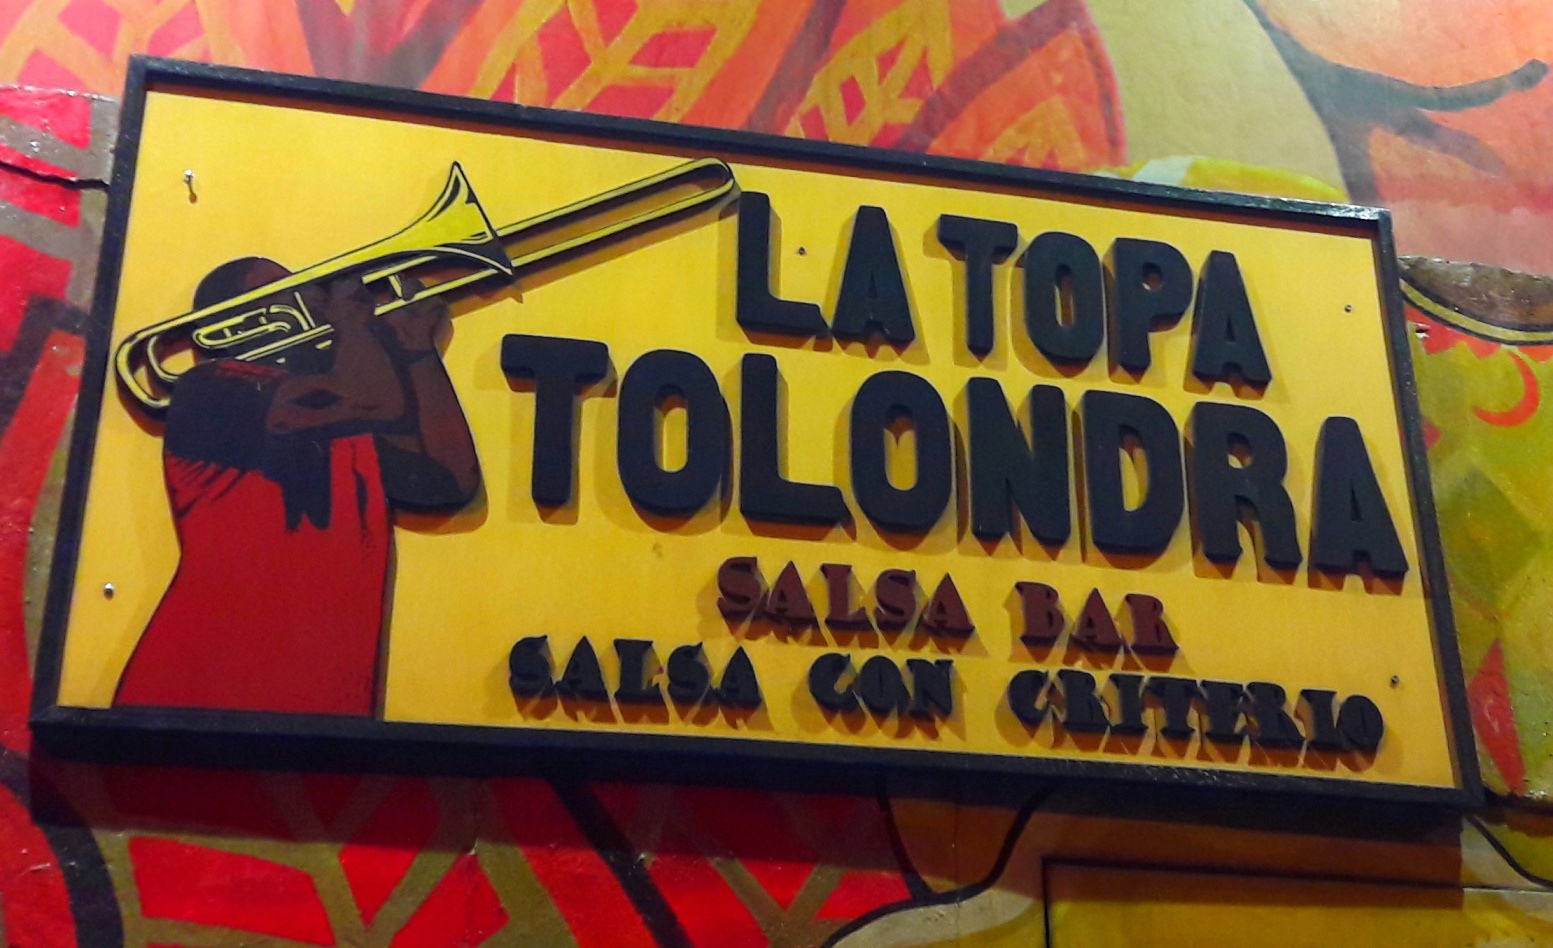 La Topa, une institution de la salsa.